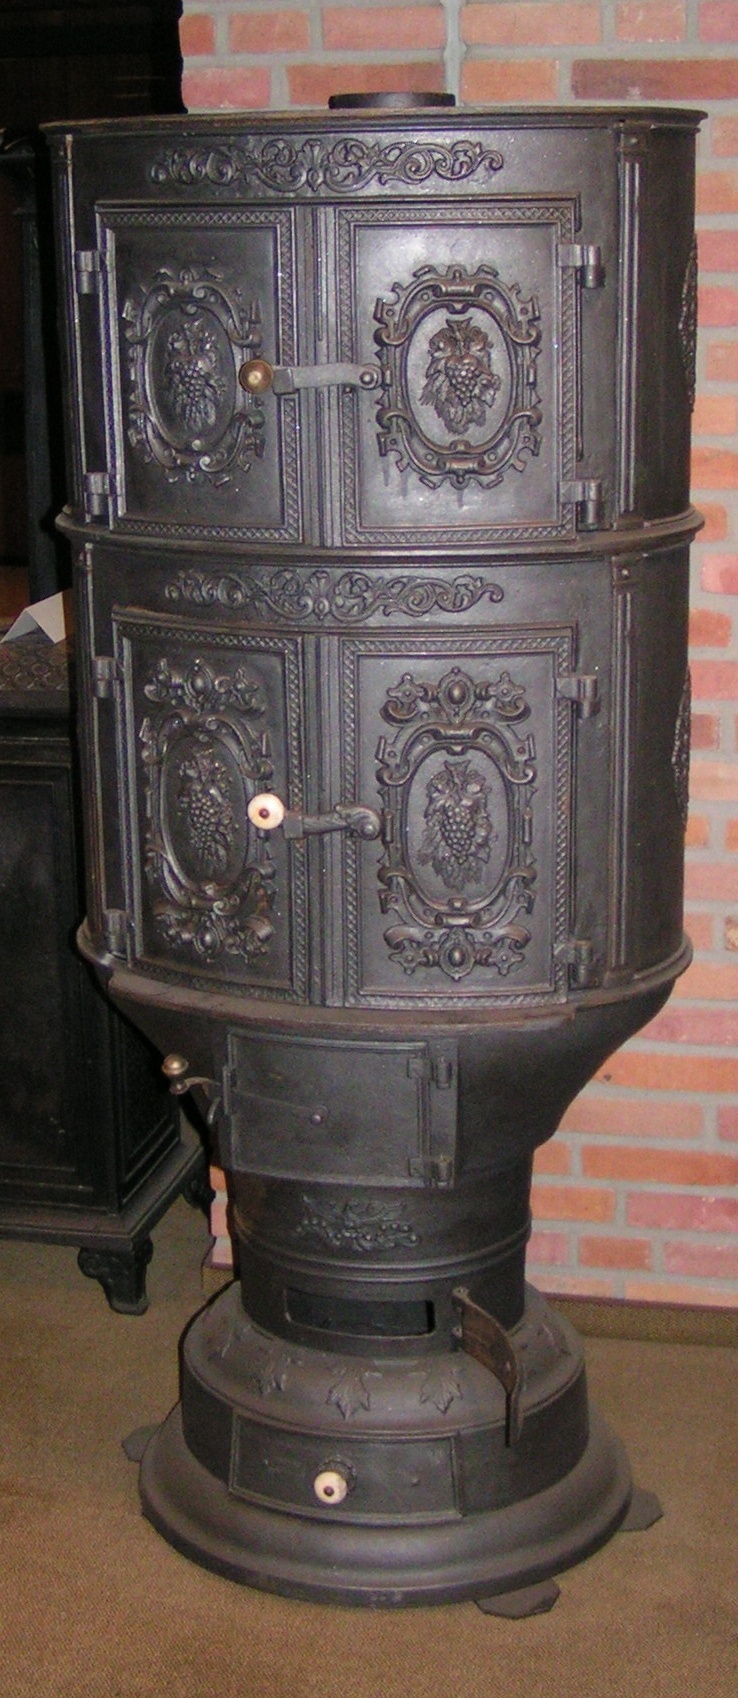 Holter Ovalofen (Förderverein Industriemuseum Schloß Holte-Stukenbrock e.V. CC BY-NC-SA)